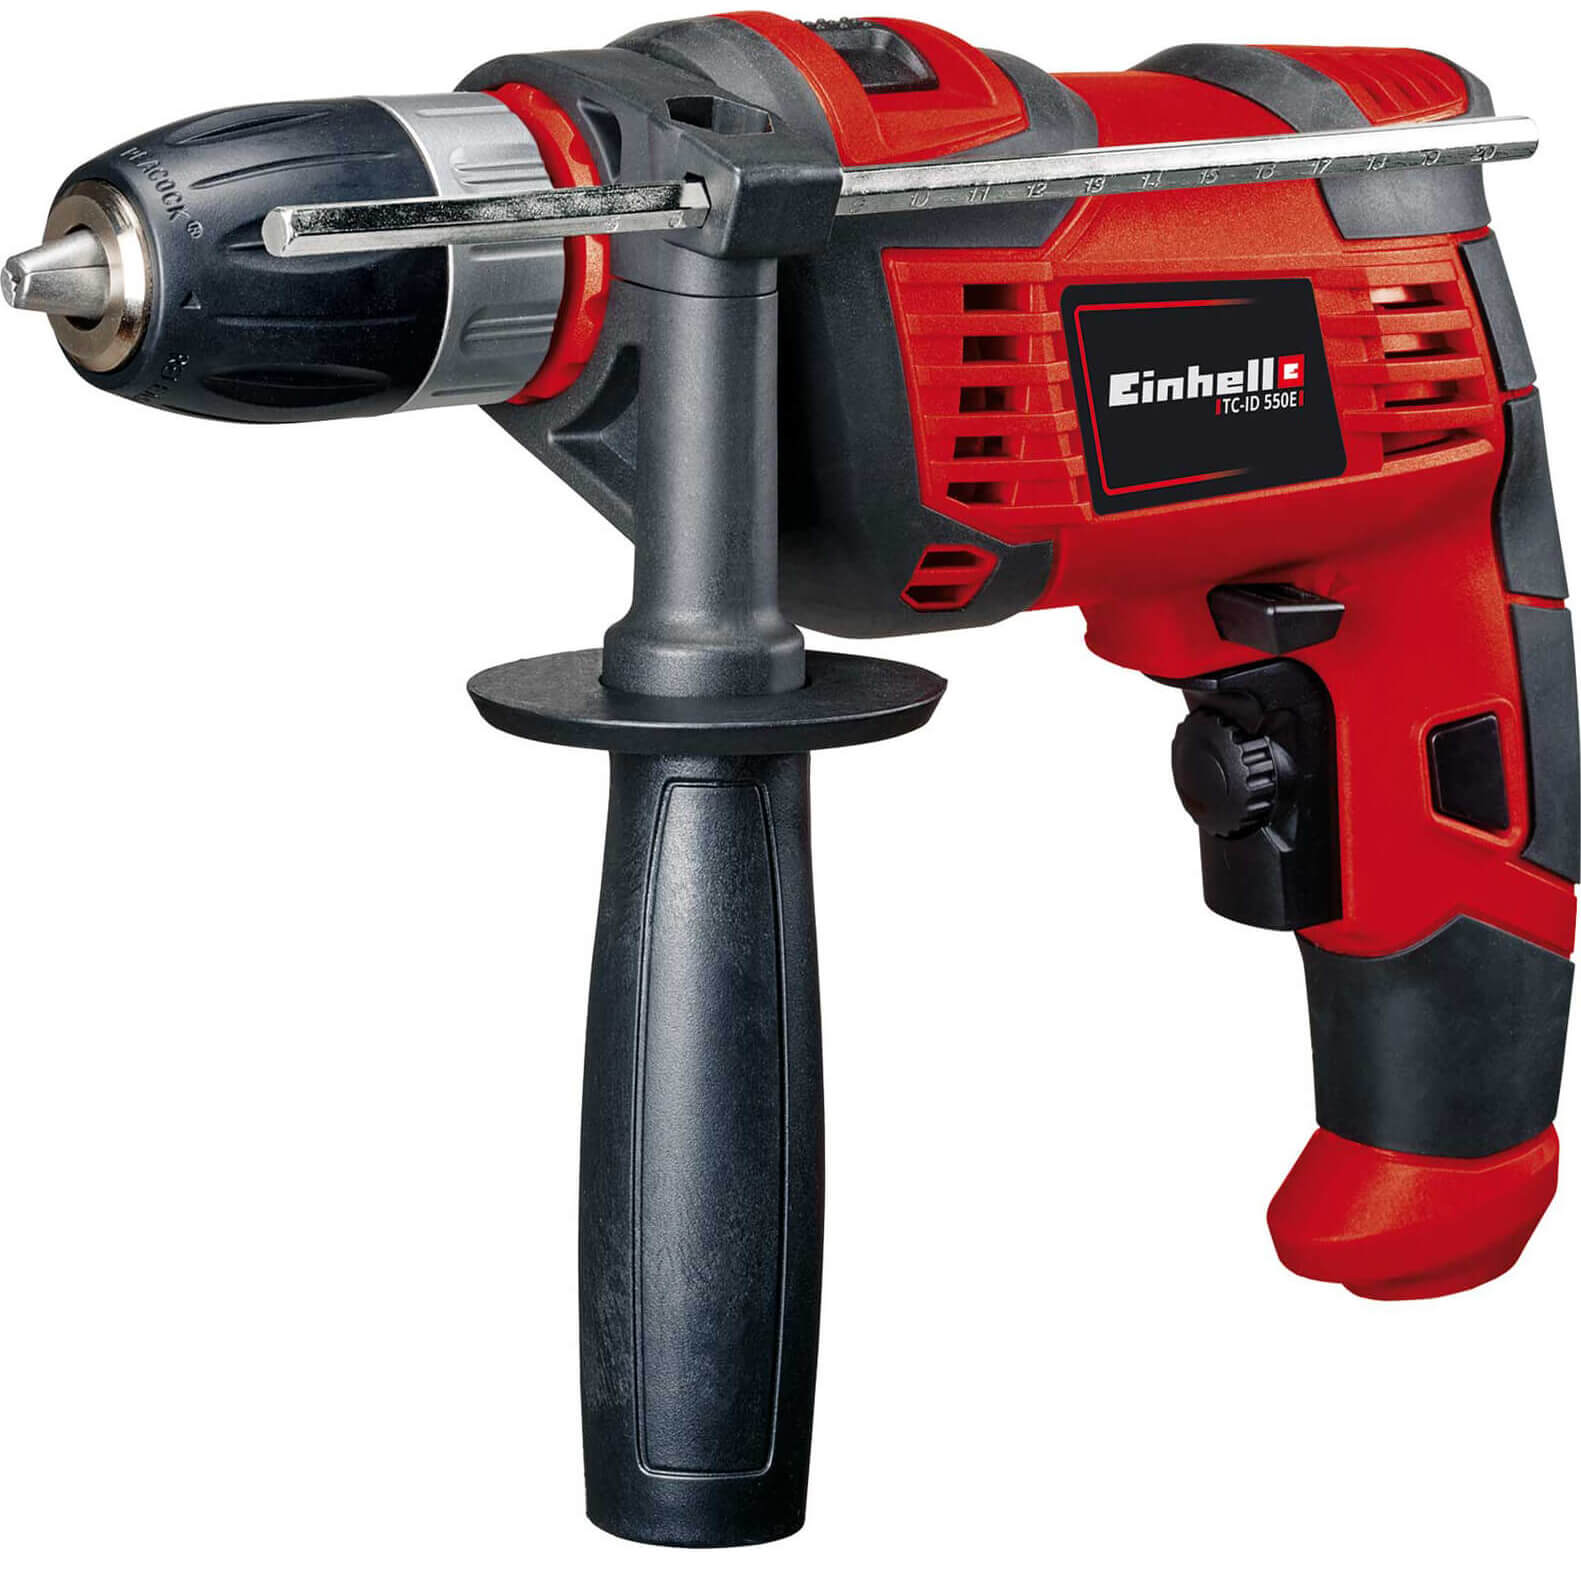 Photo of Einhell Tc-id 550 E Impact Hammer Drill